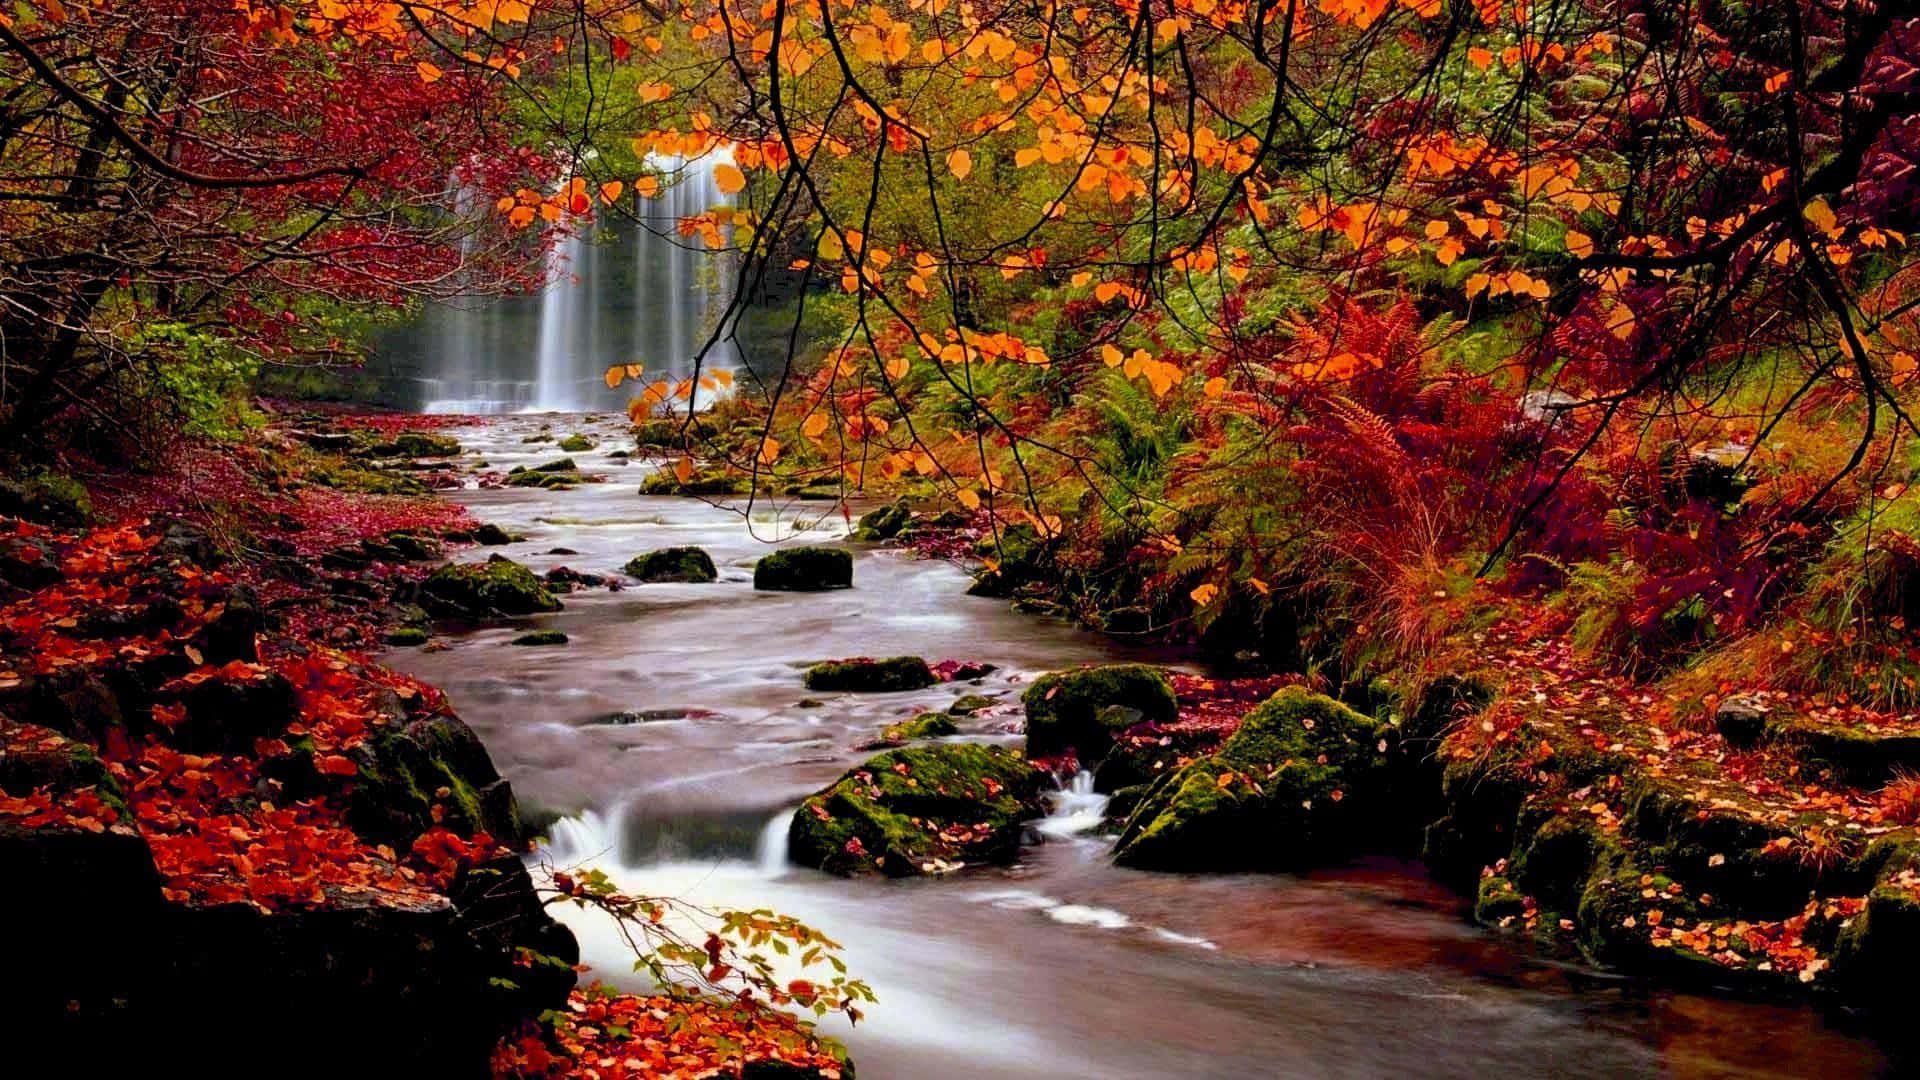 Enjoying the tranquil beauty of a vibrant fall foliage Wallpaper